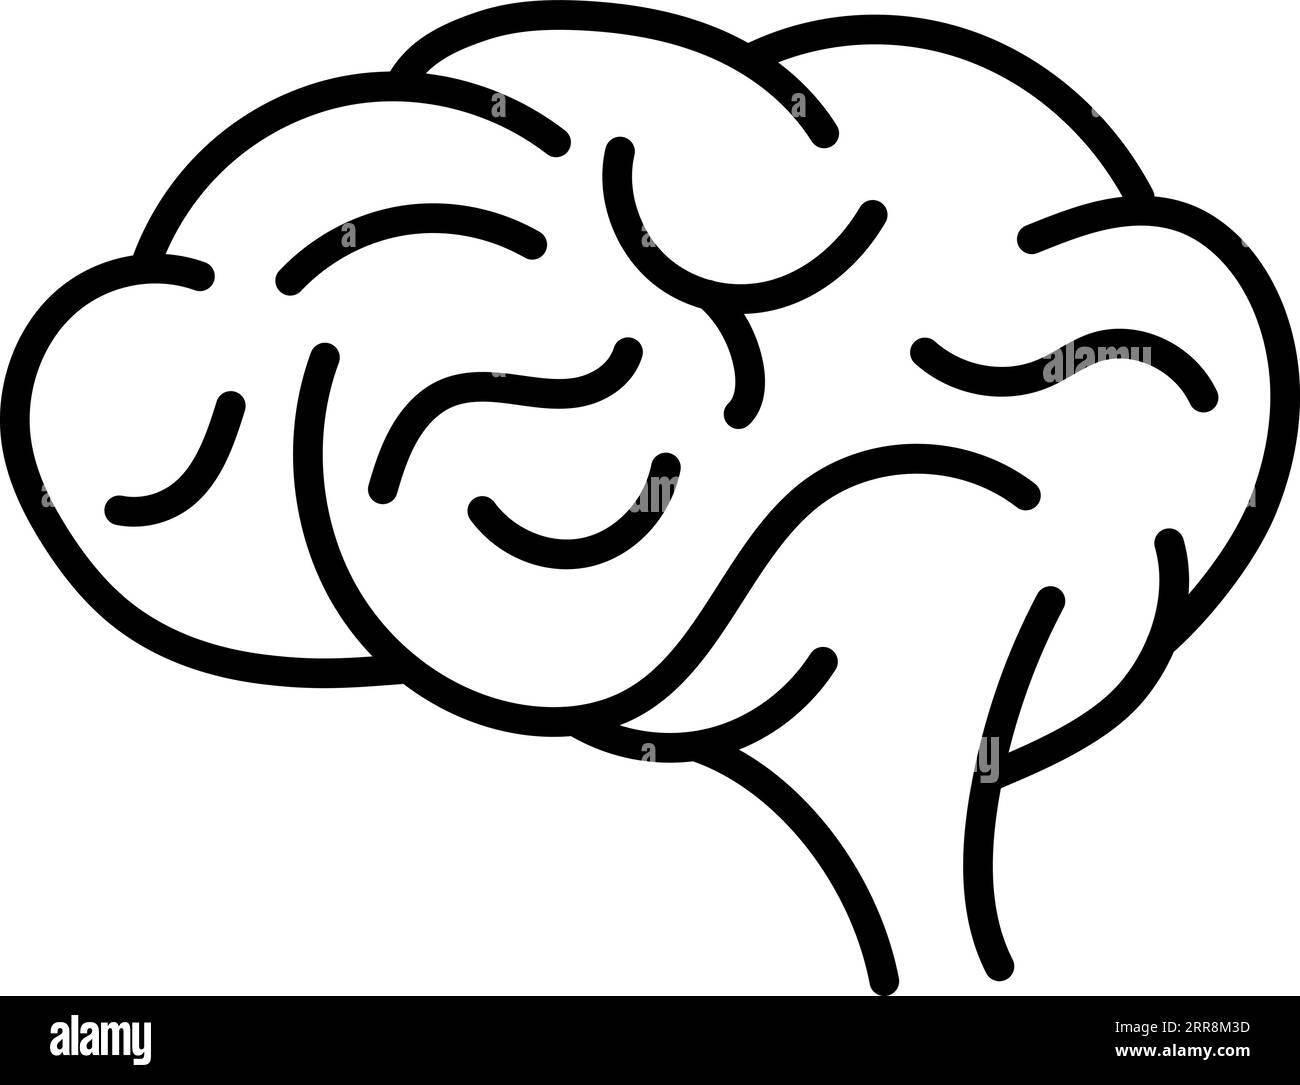 Brain gyrus icon is simple cartoon comic style Stock Vector